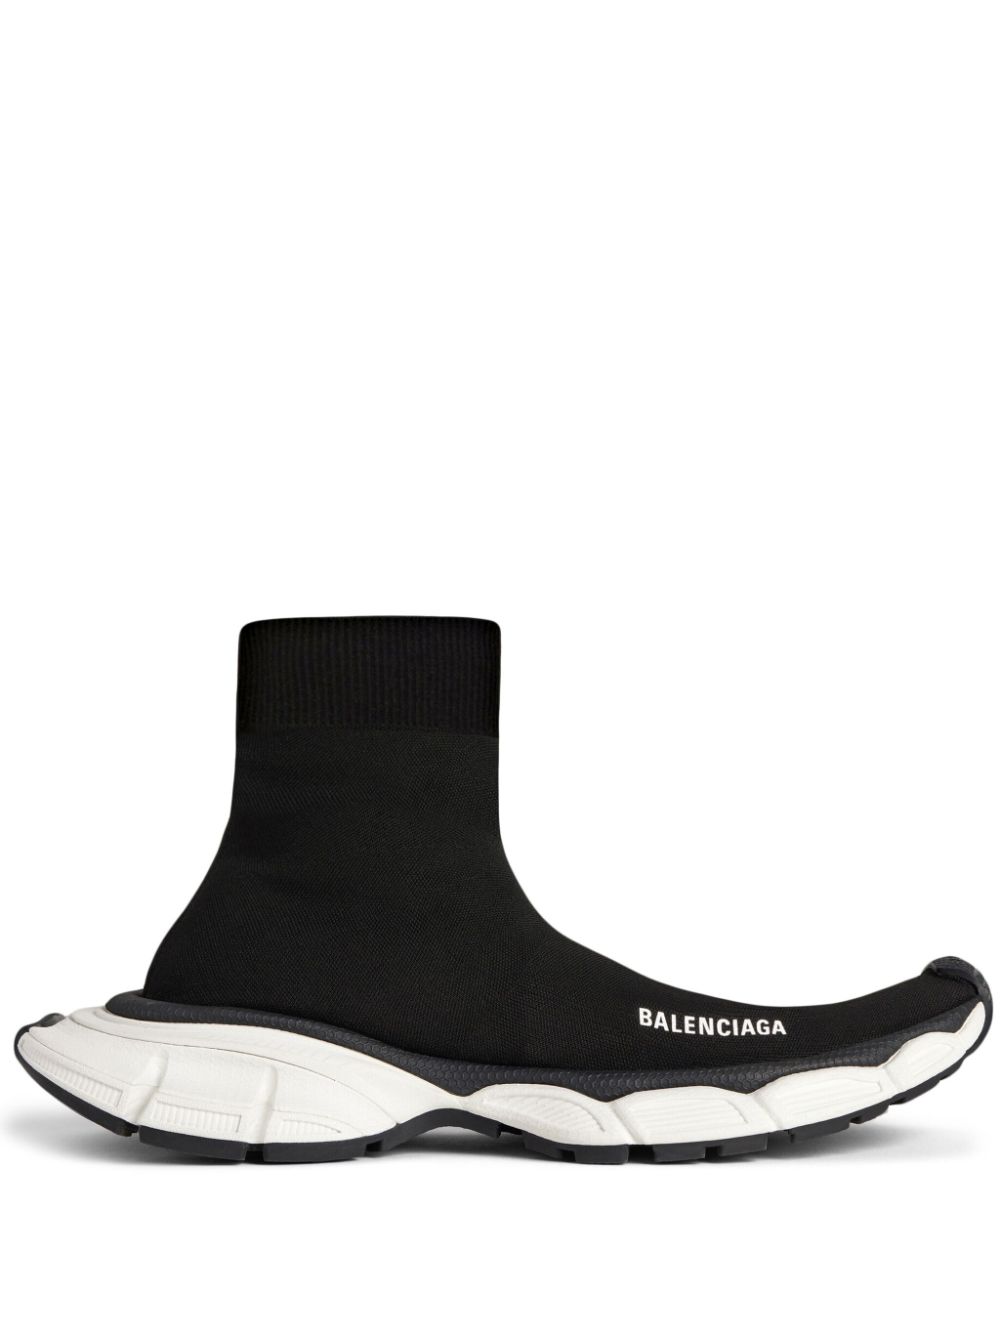 Balenciaga X Adidas Speed Lt Unisex Knit Sock Sneakers Trainers Shoe